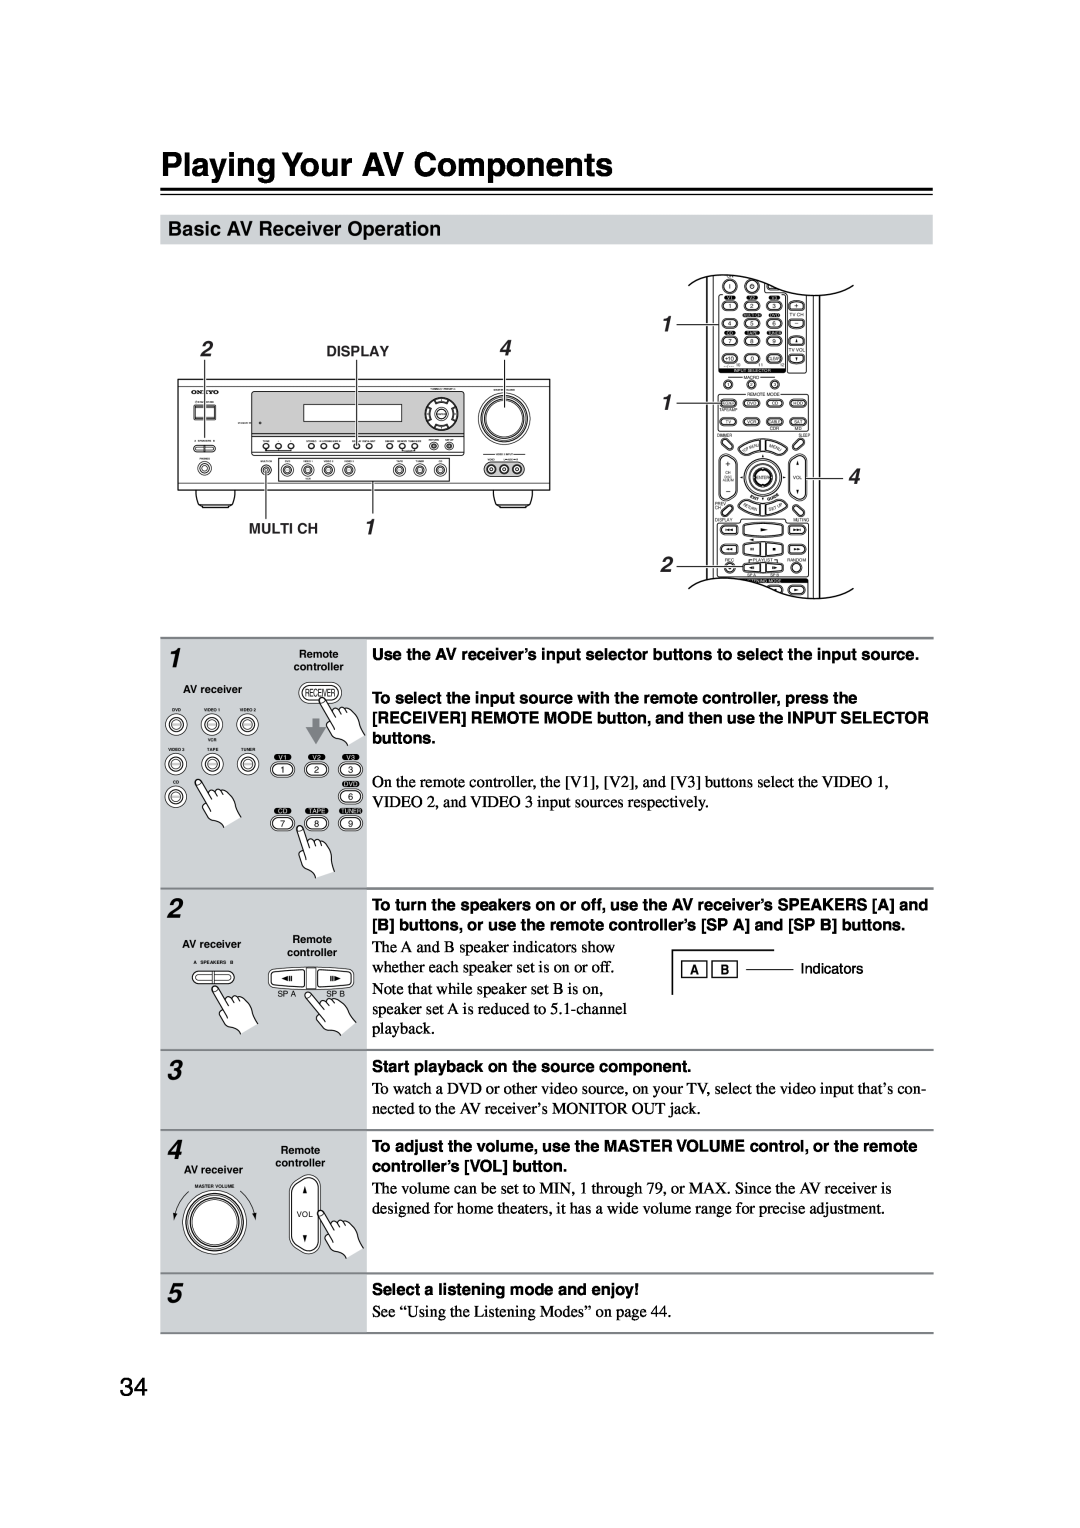 Onkyo TX-SR573 instruction manual Basic AV Receiver Operation, Playing Your AV Components 